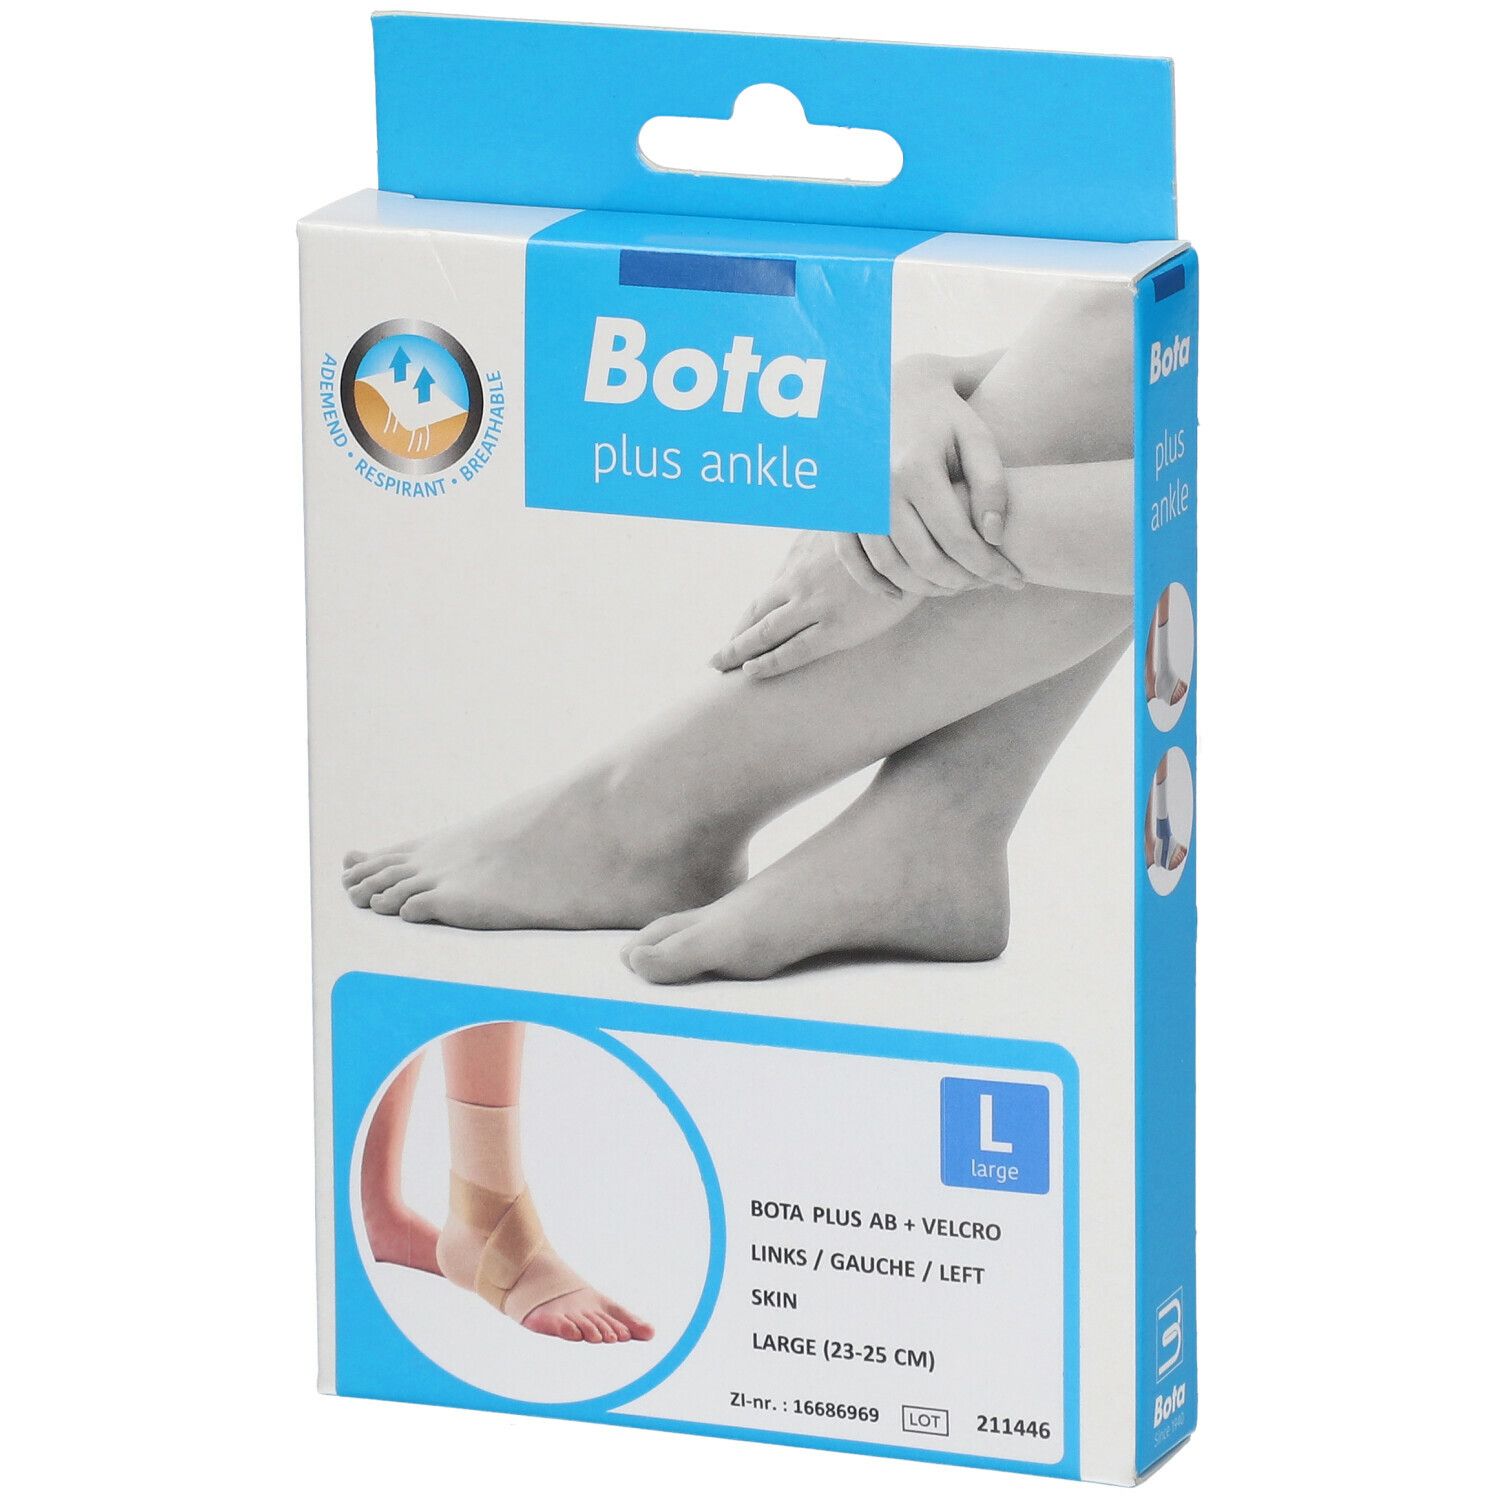 Bota Plus AB Cheville + Velcro Gauche Skin Large